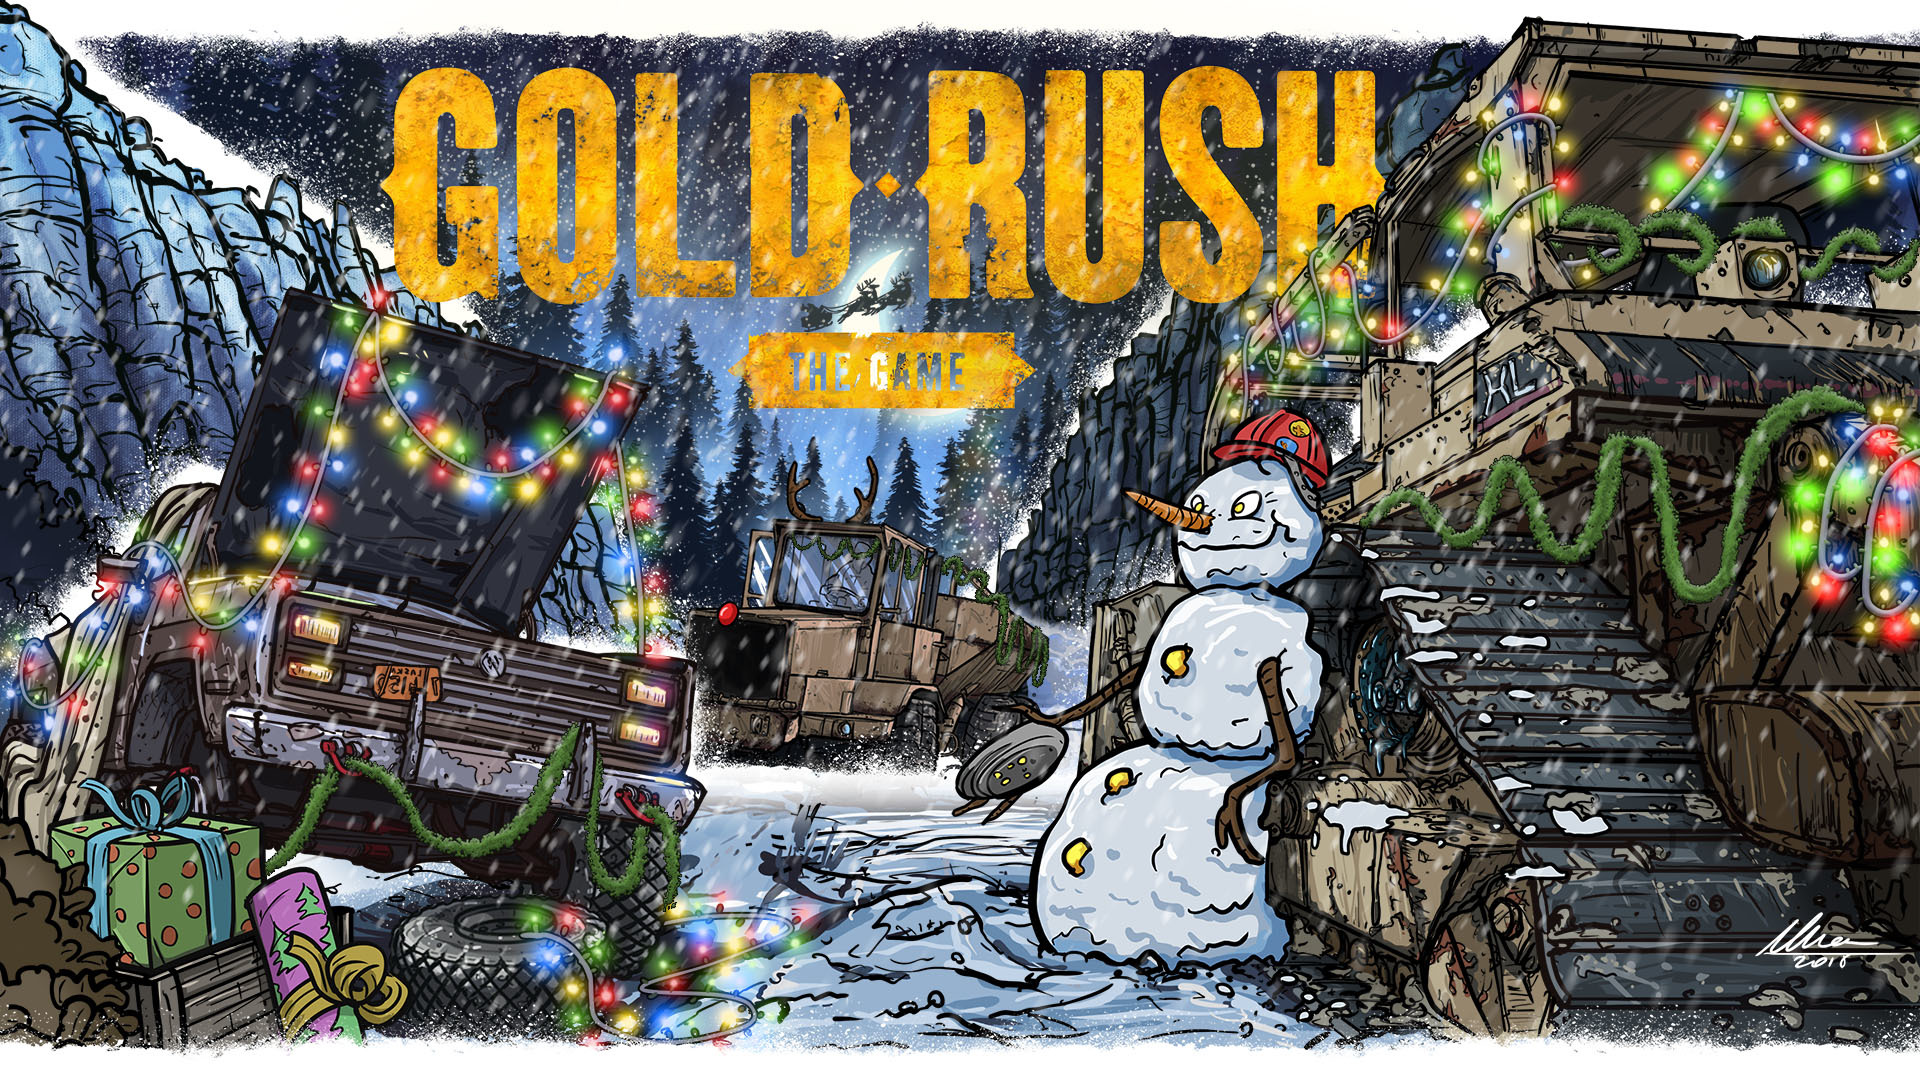 gold rush game free tpb